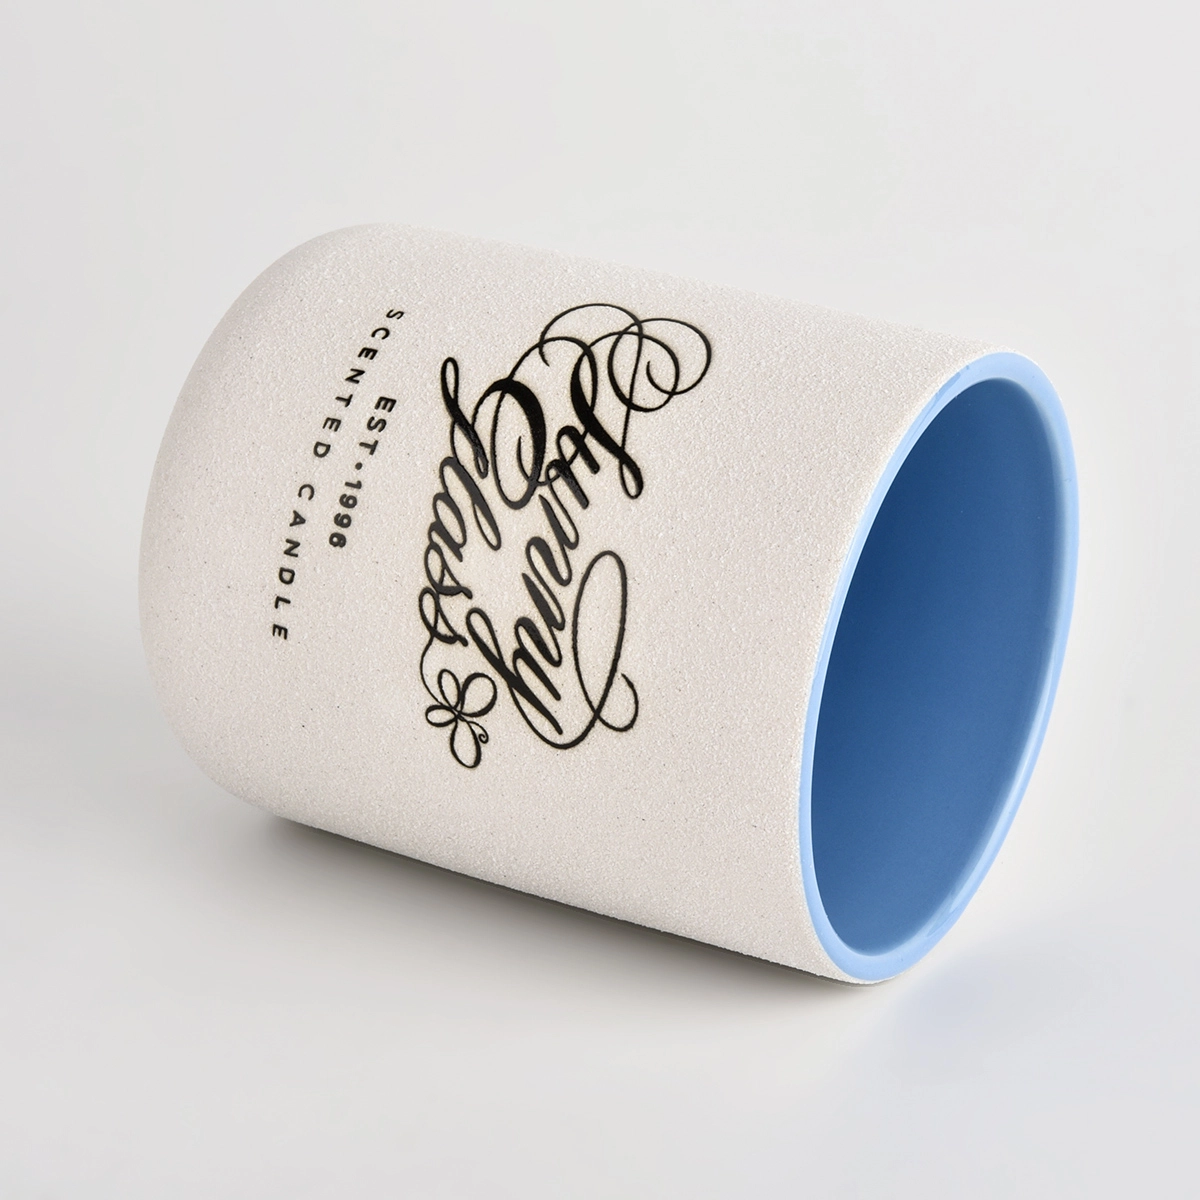 2022 new OEM/ODM private label ceramic candle jars with bran name 